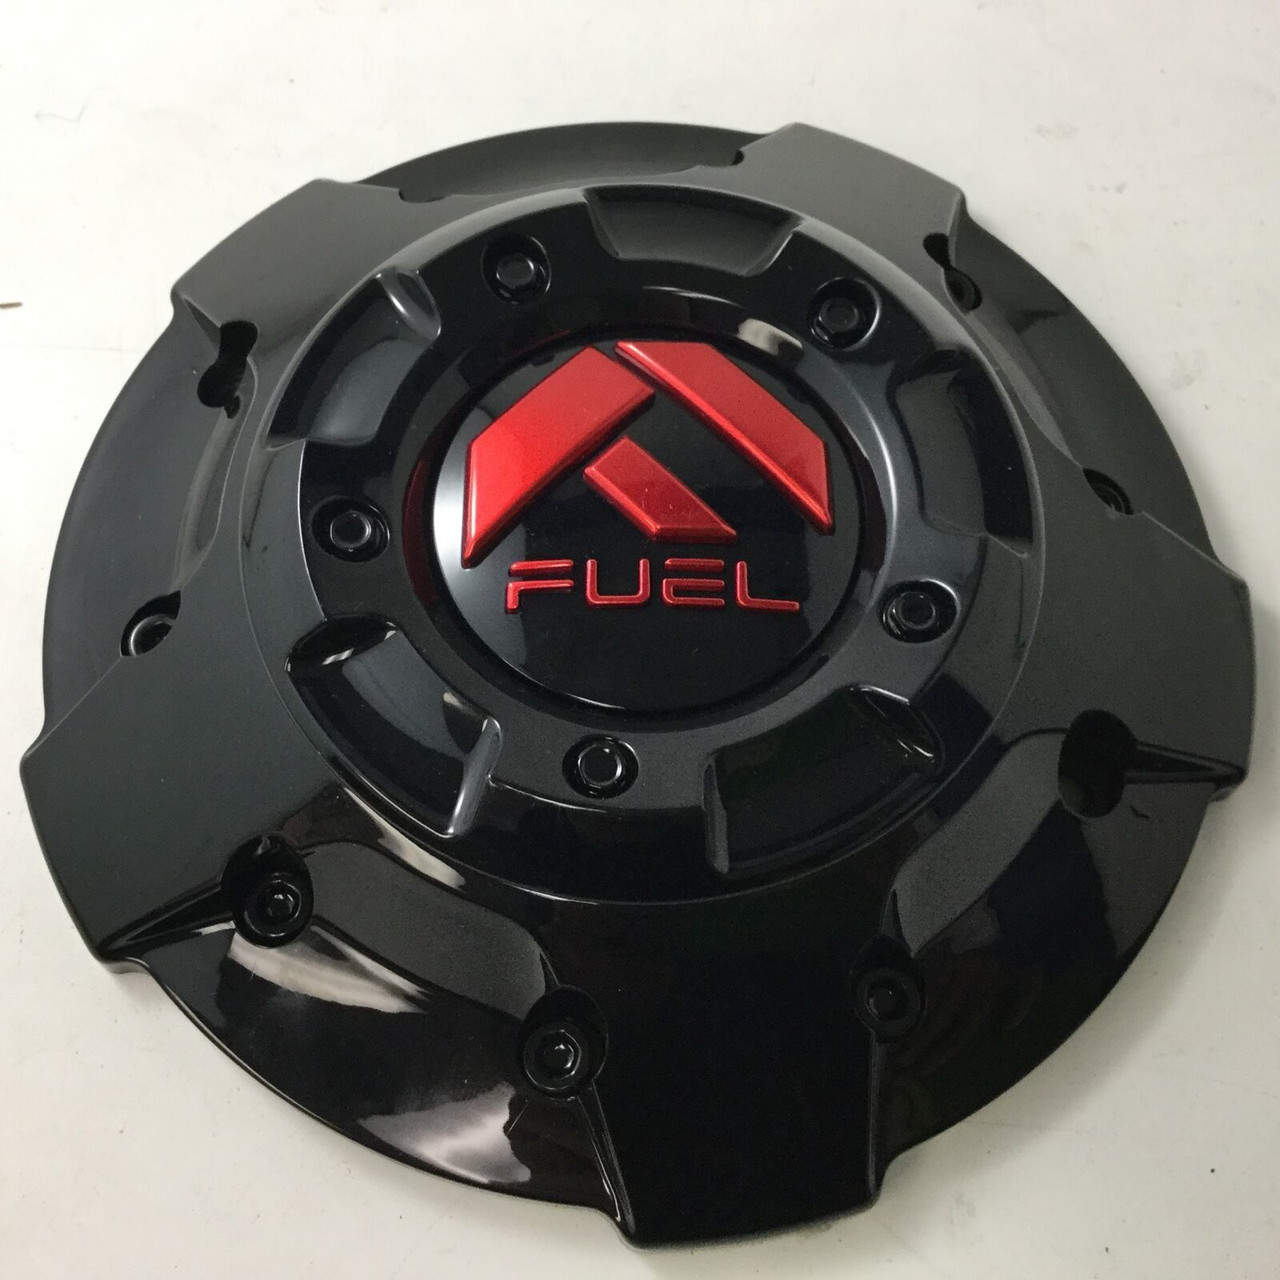 Set 4 Fuel Offroad 5/6 Lug Center Caps Gloss Black Red Contra D643 1003-81GBQ